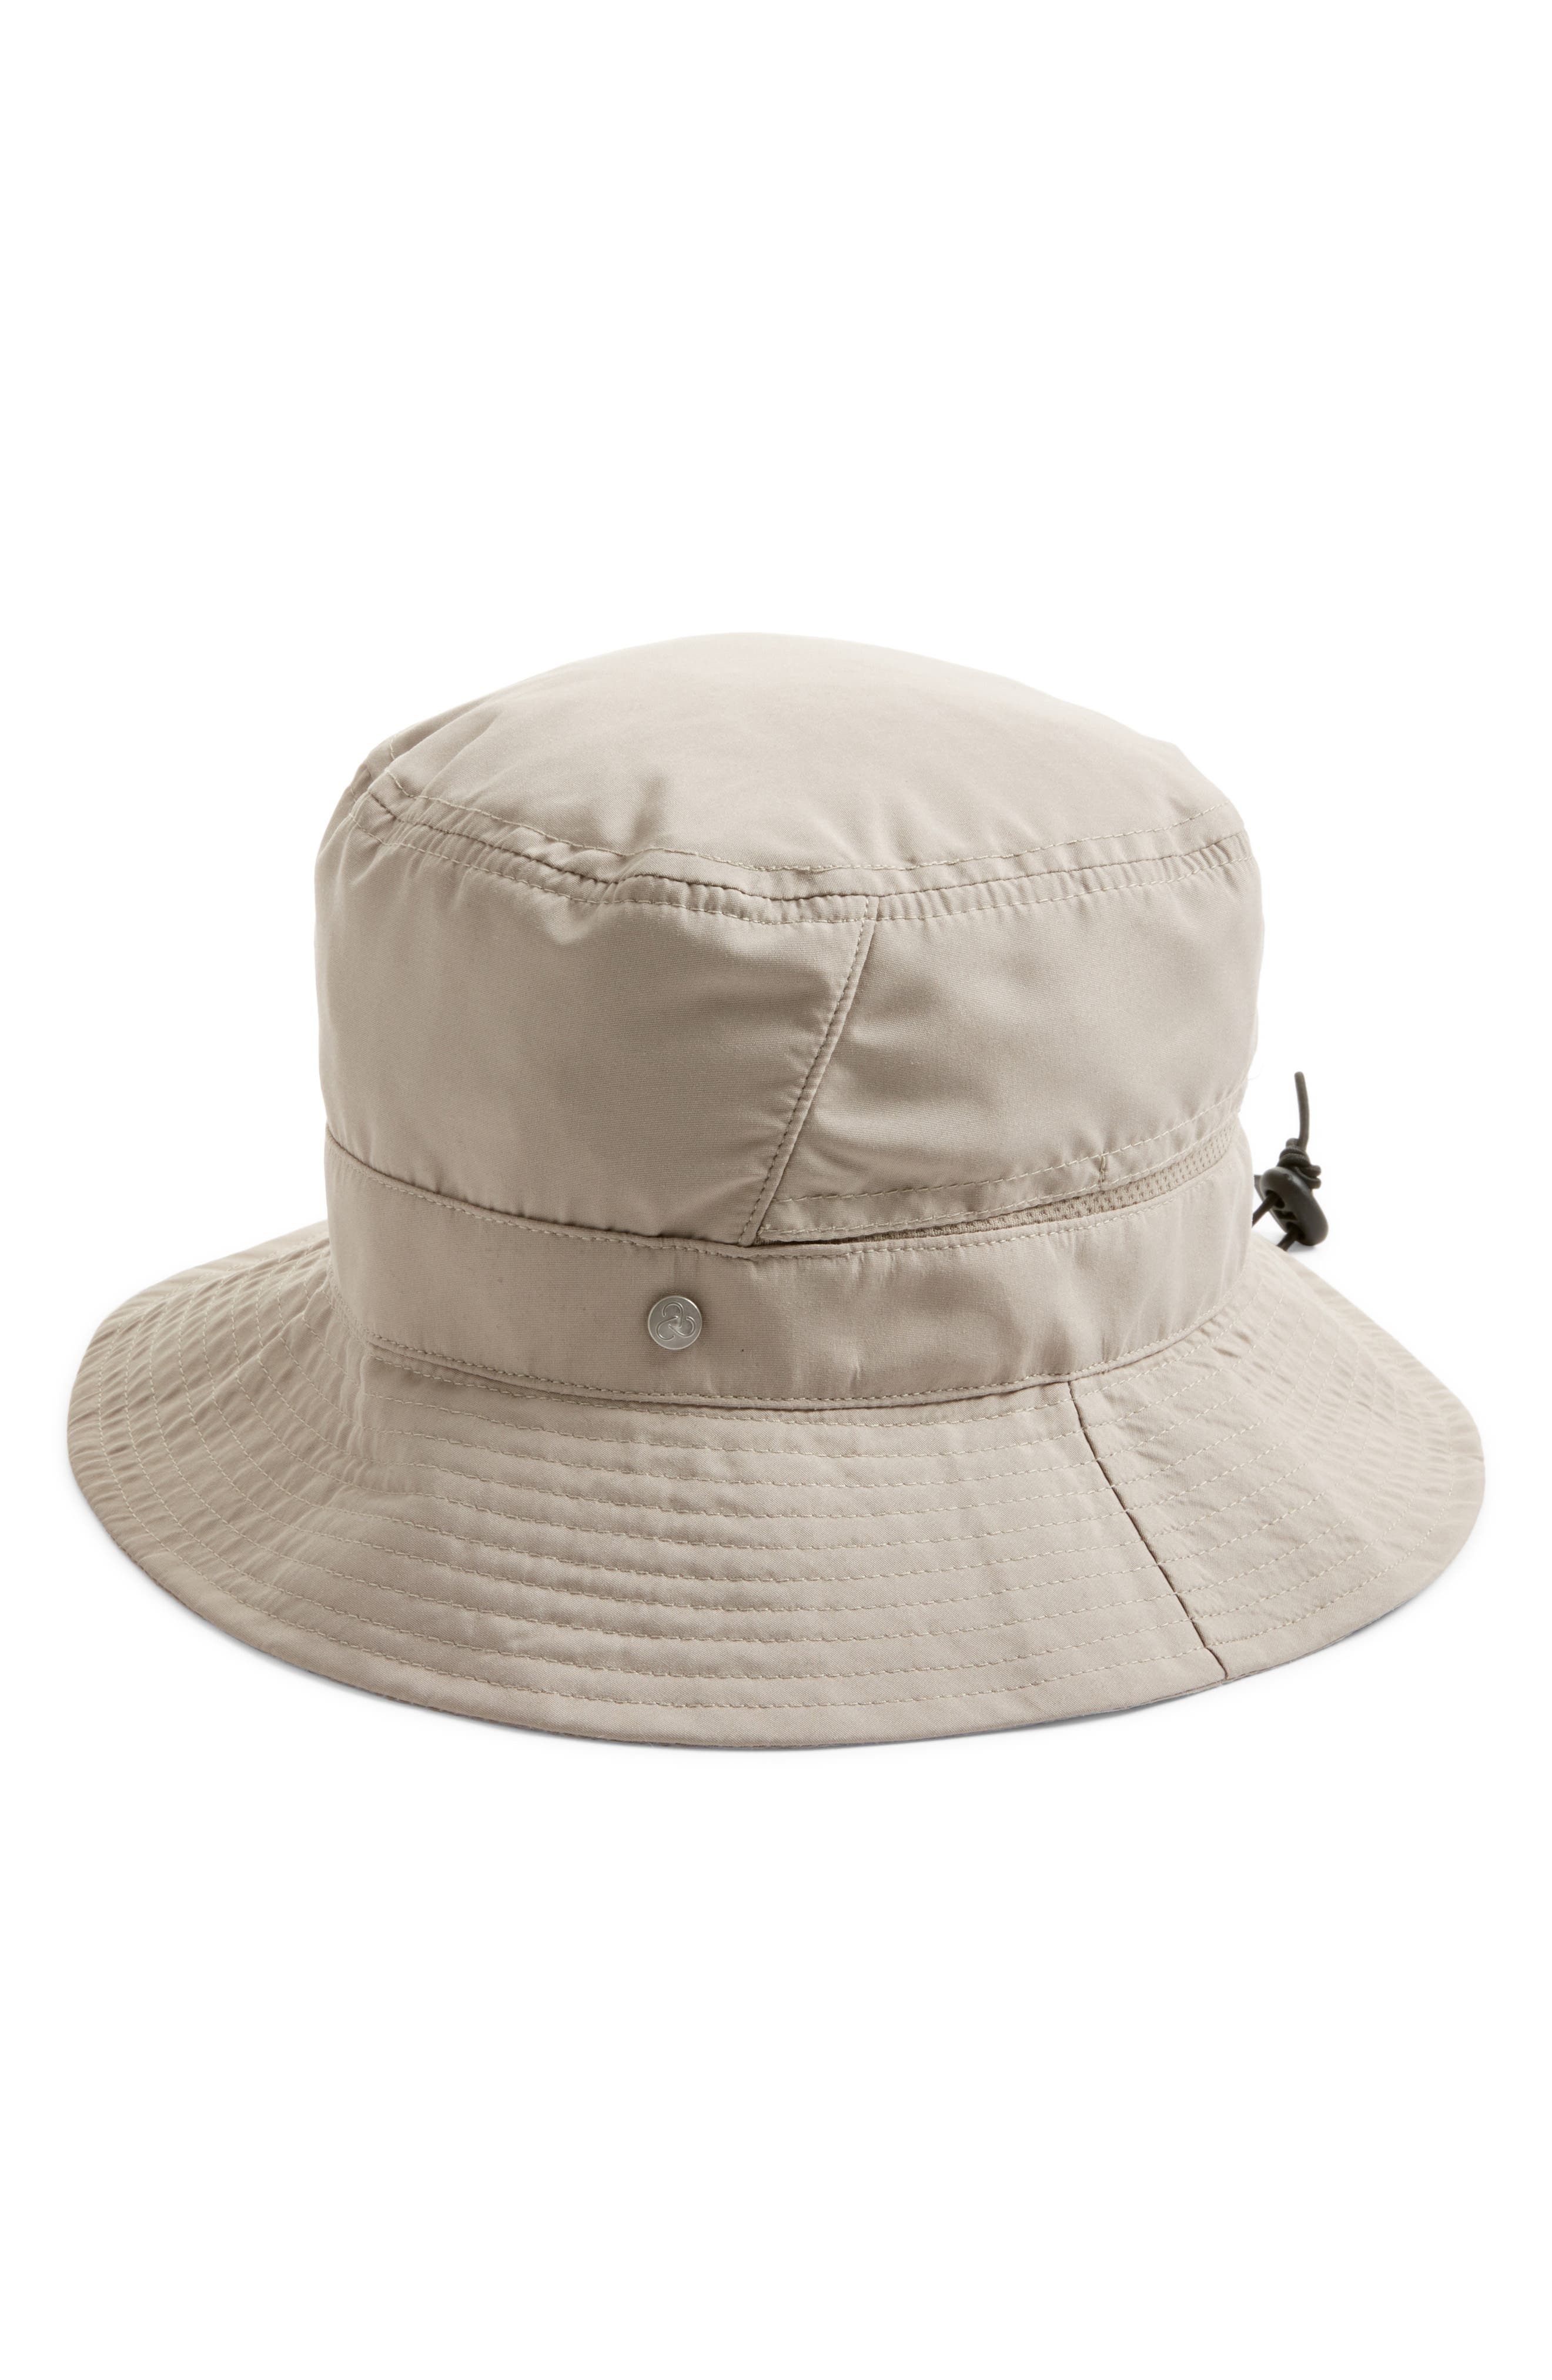 Casual Outdoor Fishing Hiking Safari Boonie Hat. Tie dyed Denim Bucket Hat Reversible Vintage 100/% Washed Cotton Canvas Denim Bucket Hat